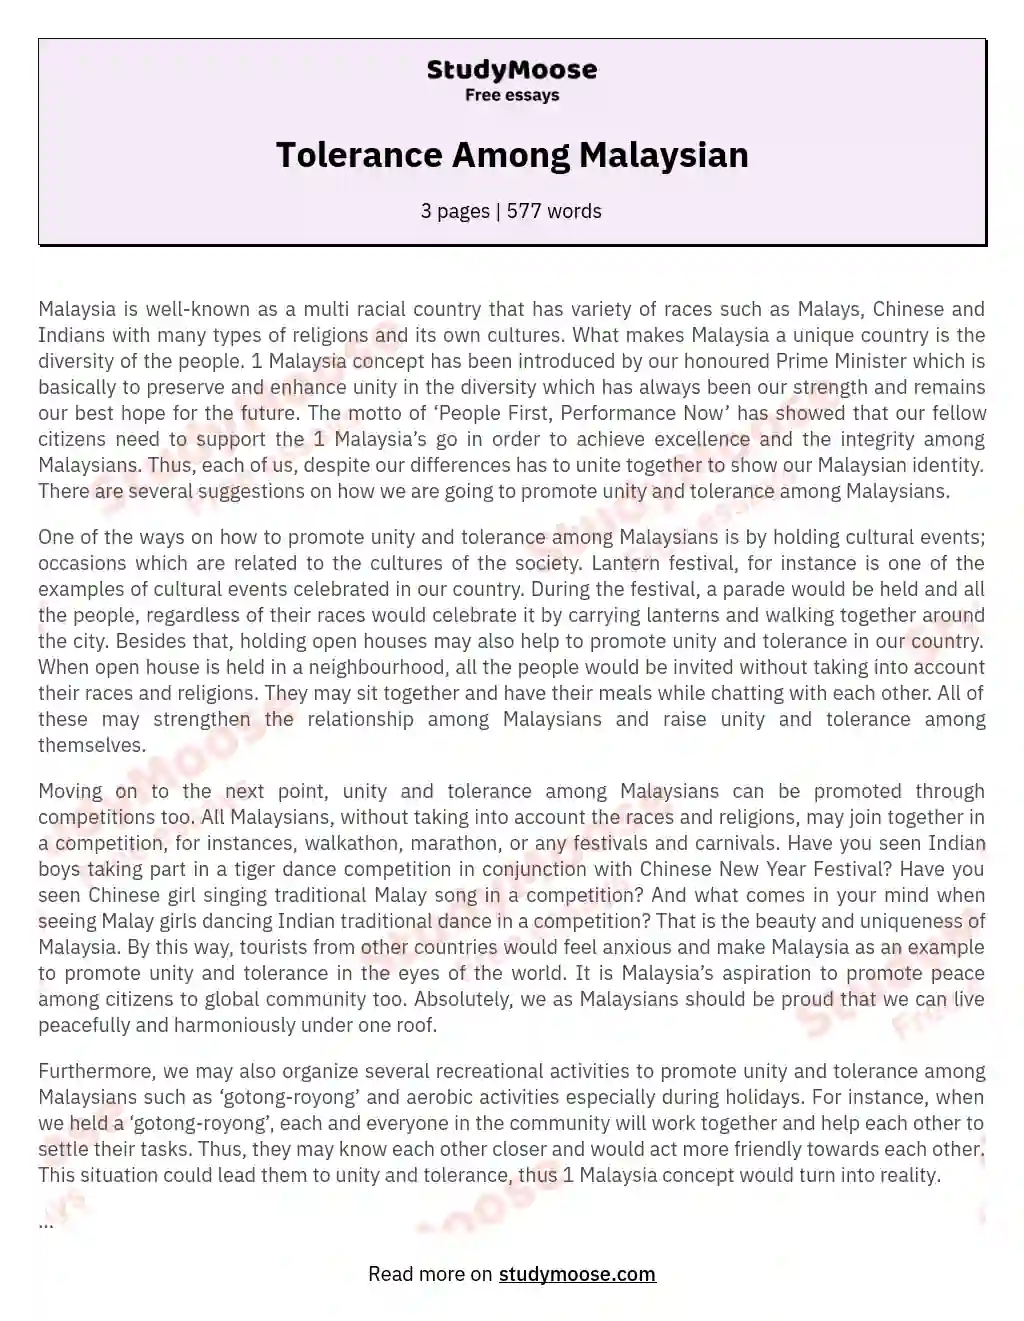 Tolerance Among Malaysian essay